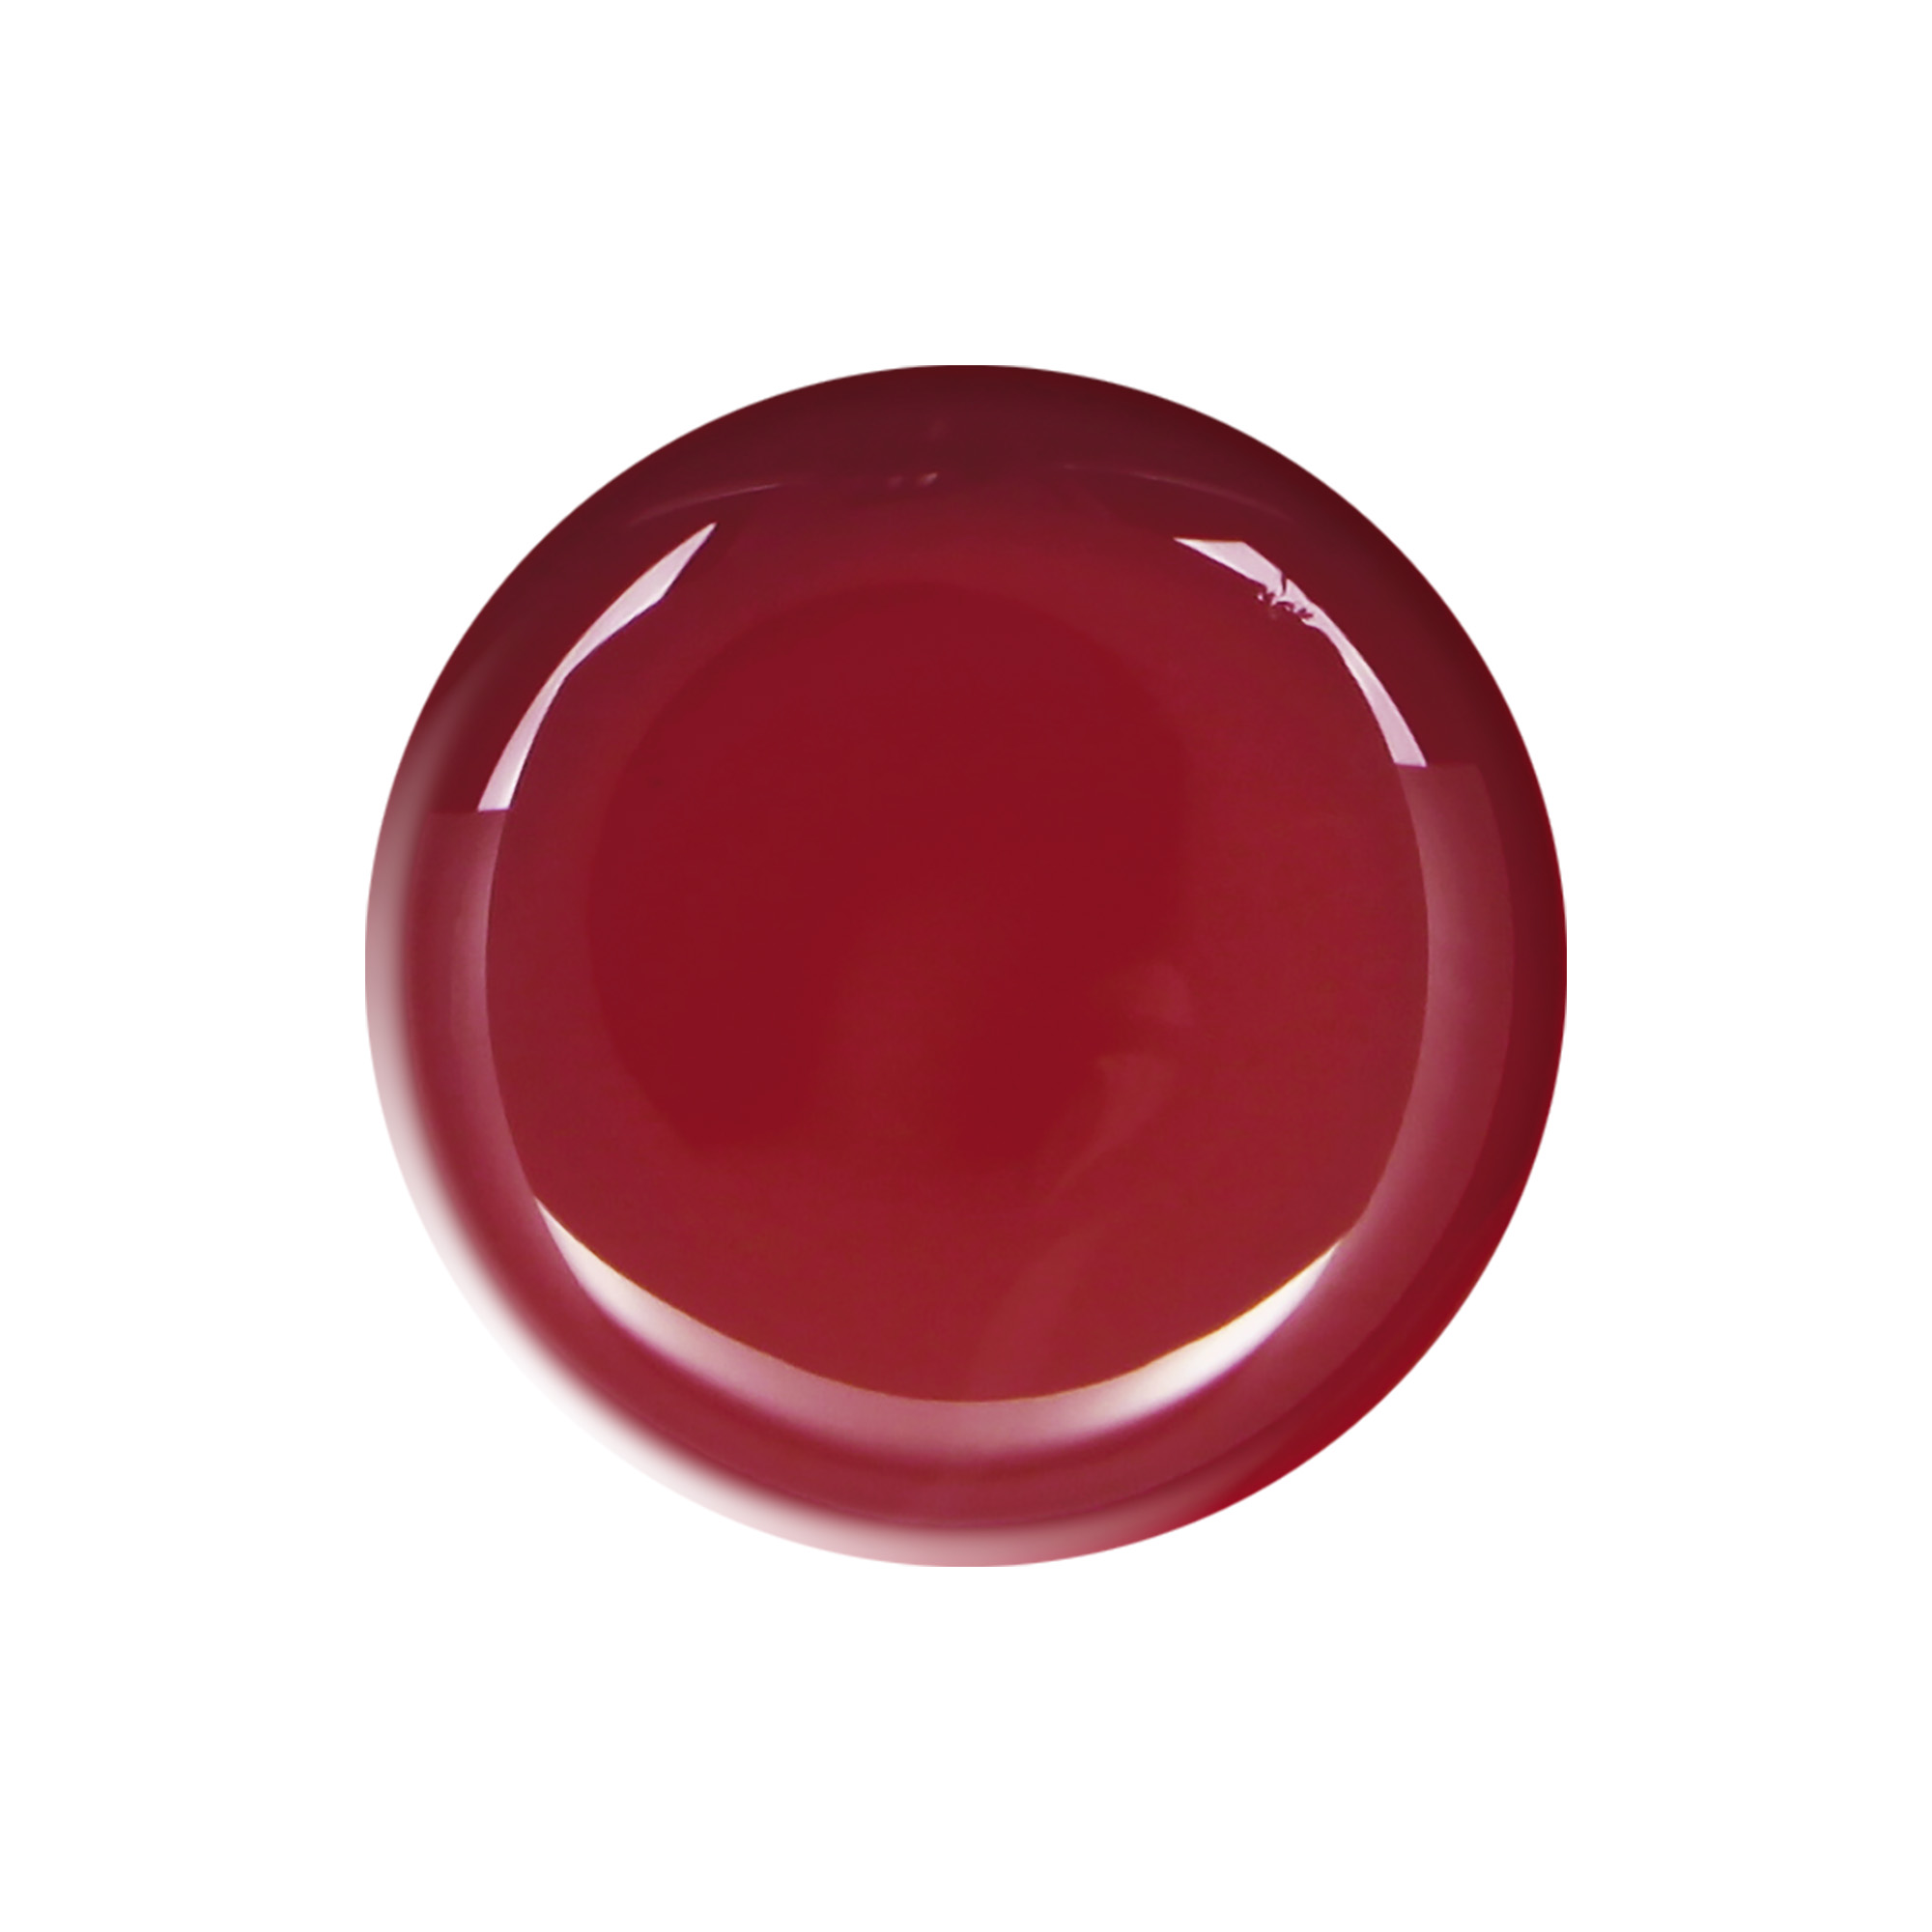 Nagellack Iconic Red dunkelrot 10 ml TNS